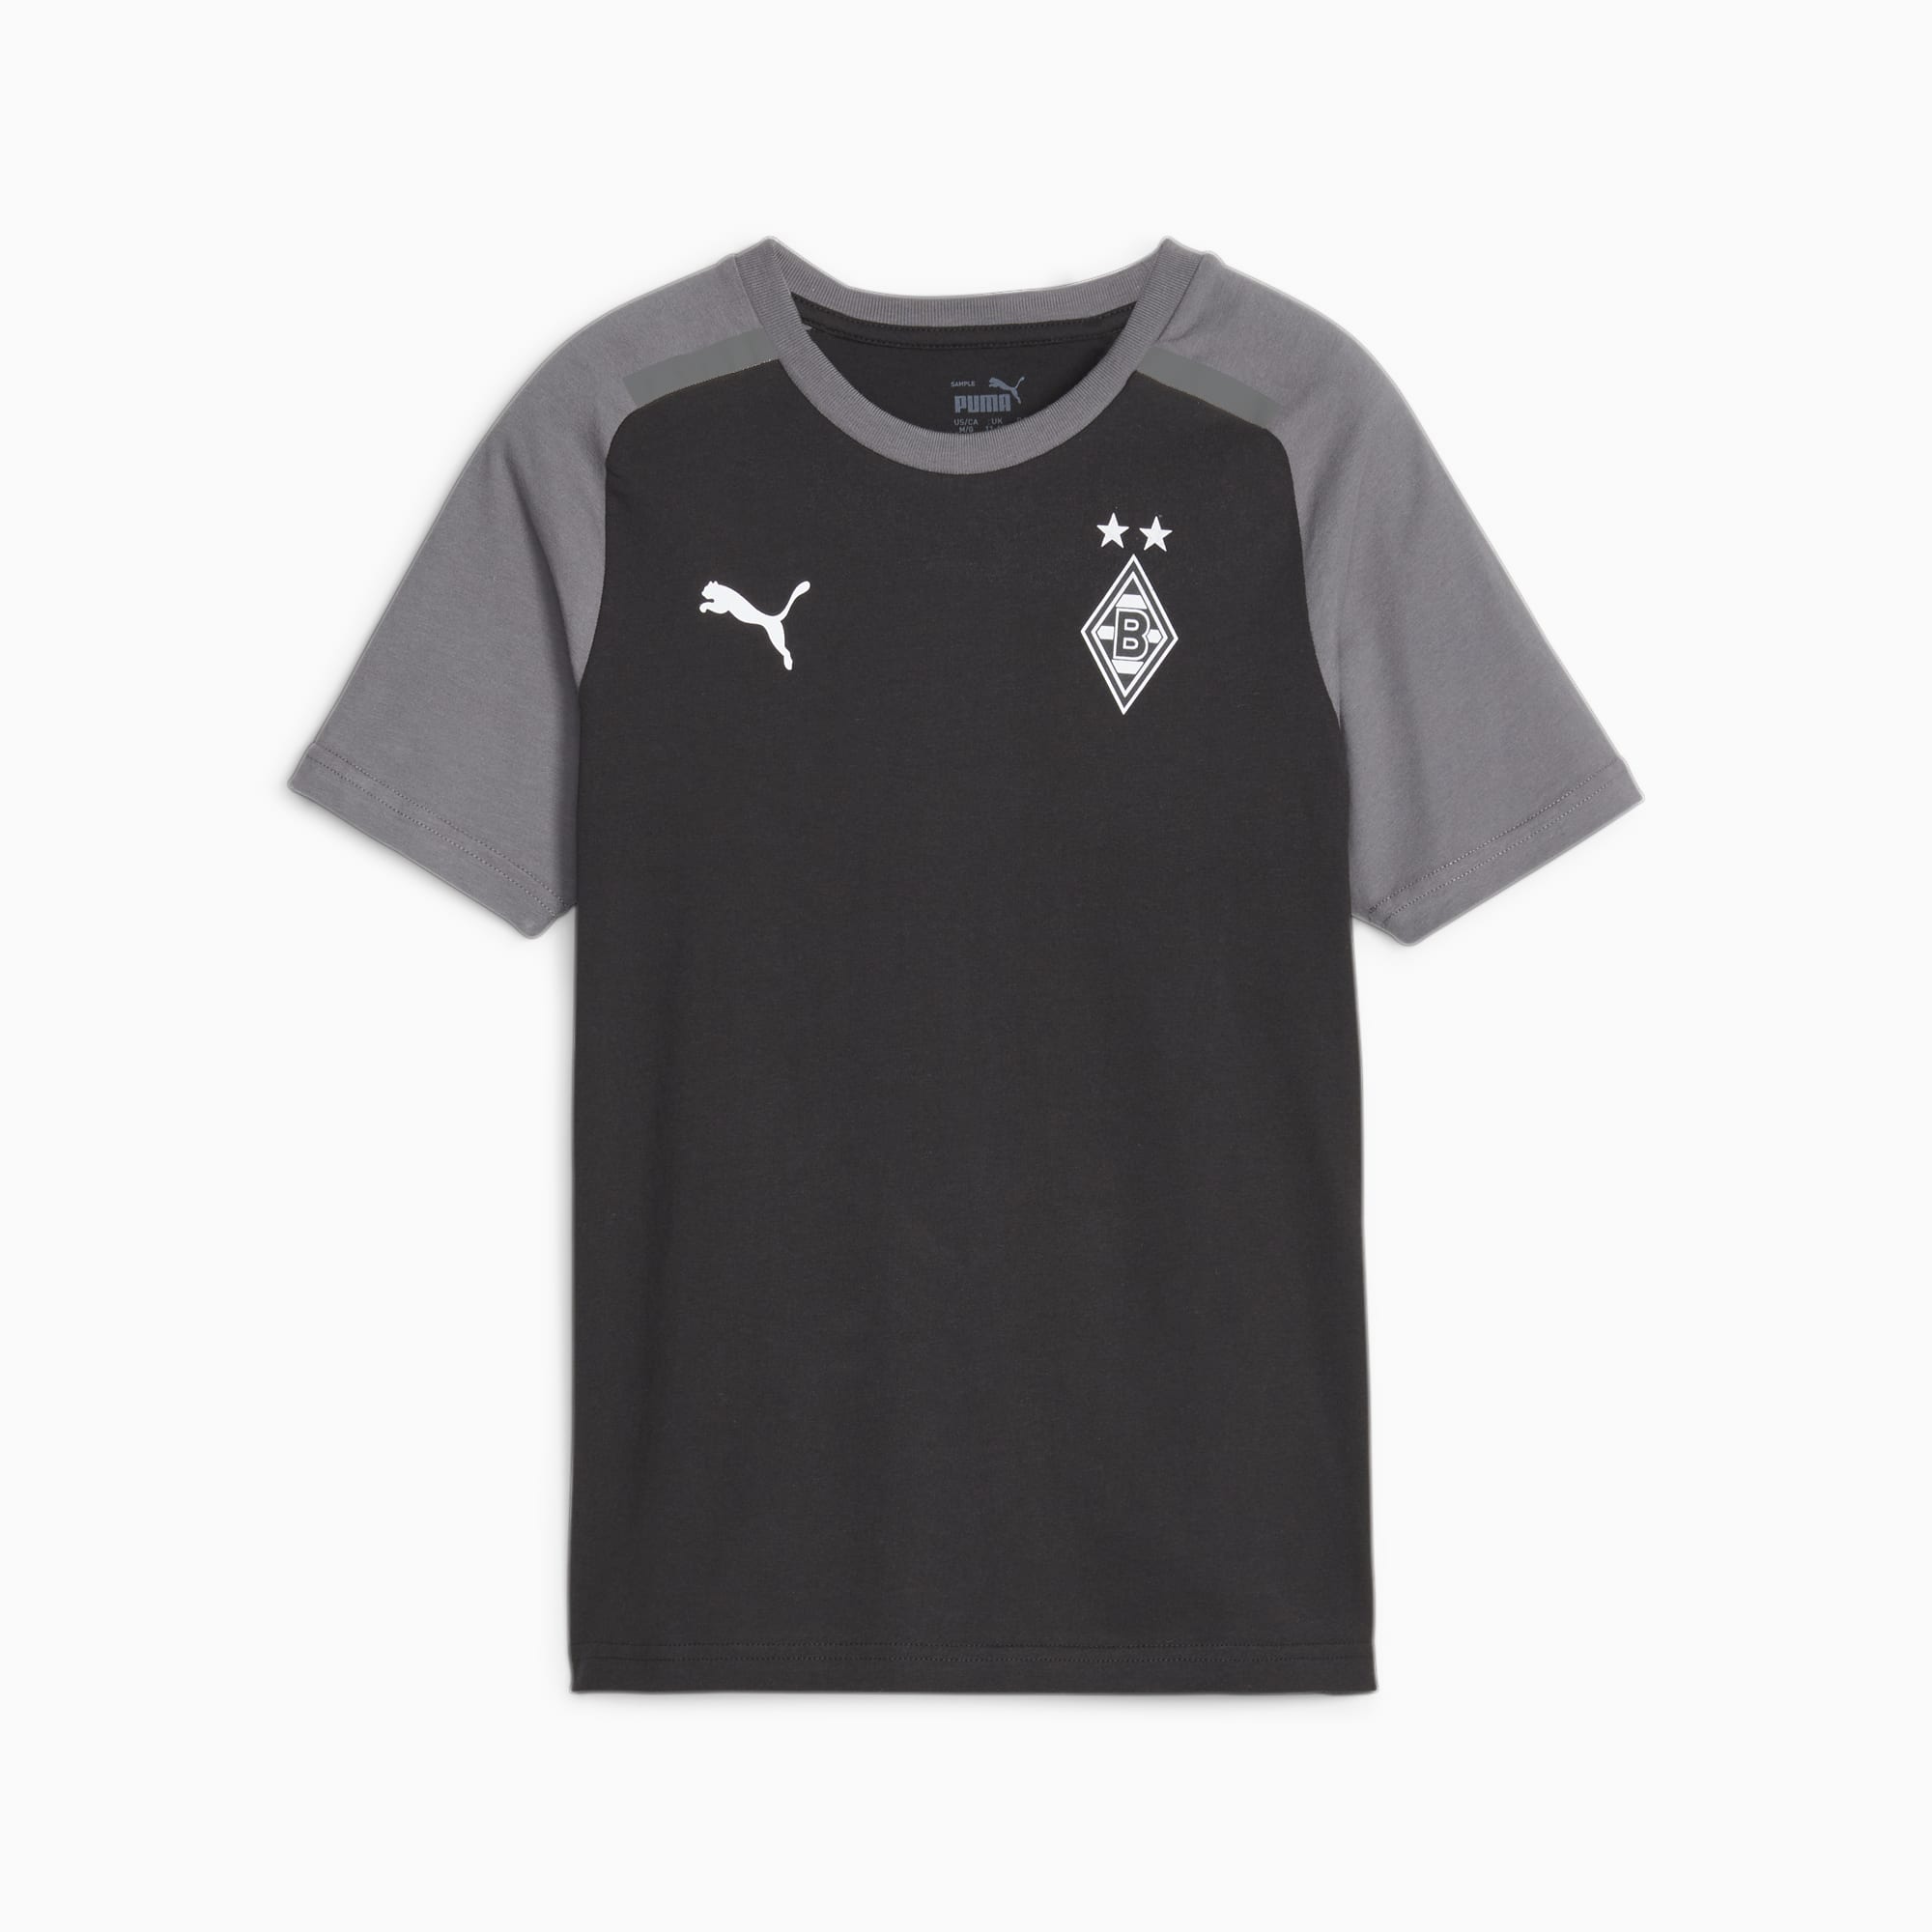 PUMA Camiseta Juvenil De Fútbol Borussia Mönchengladbach Casuals, Gris/Negro